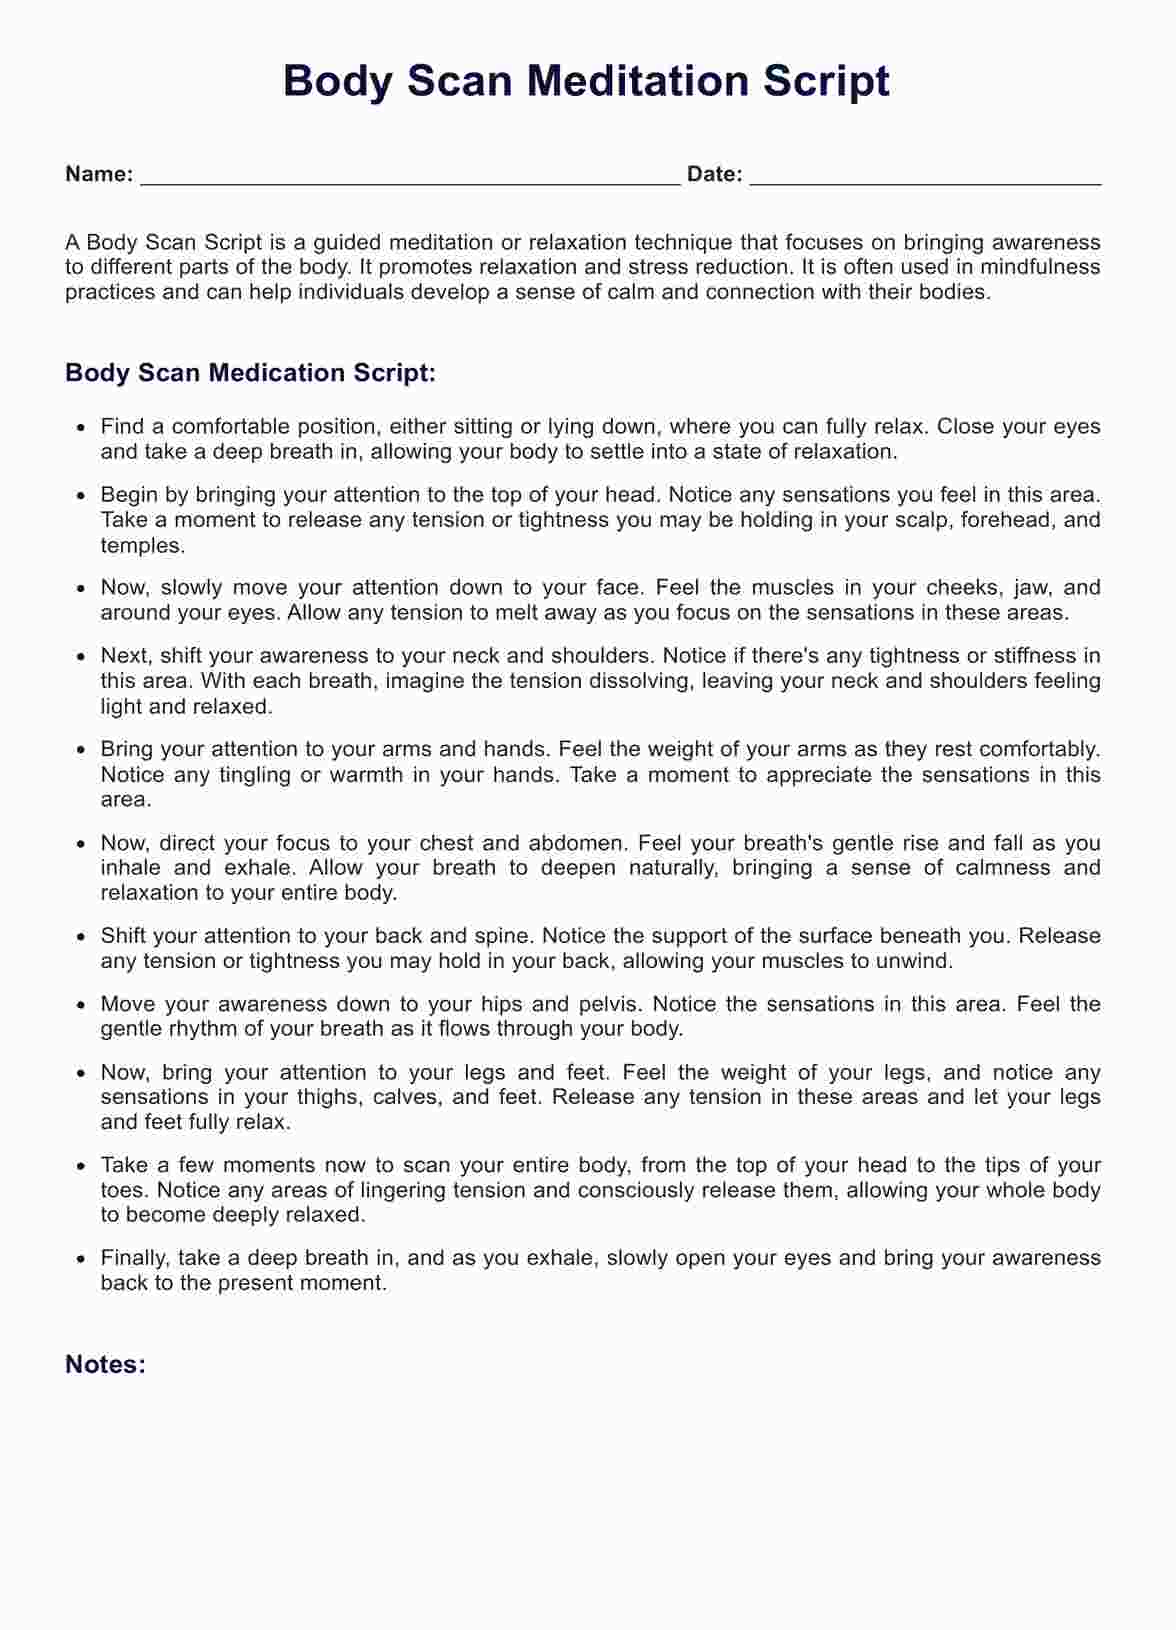 Body Scan Meditation Script PDF Example